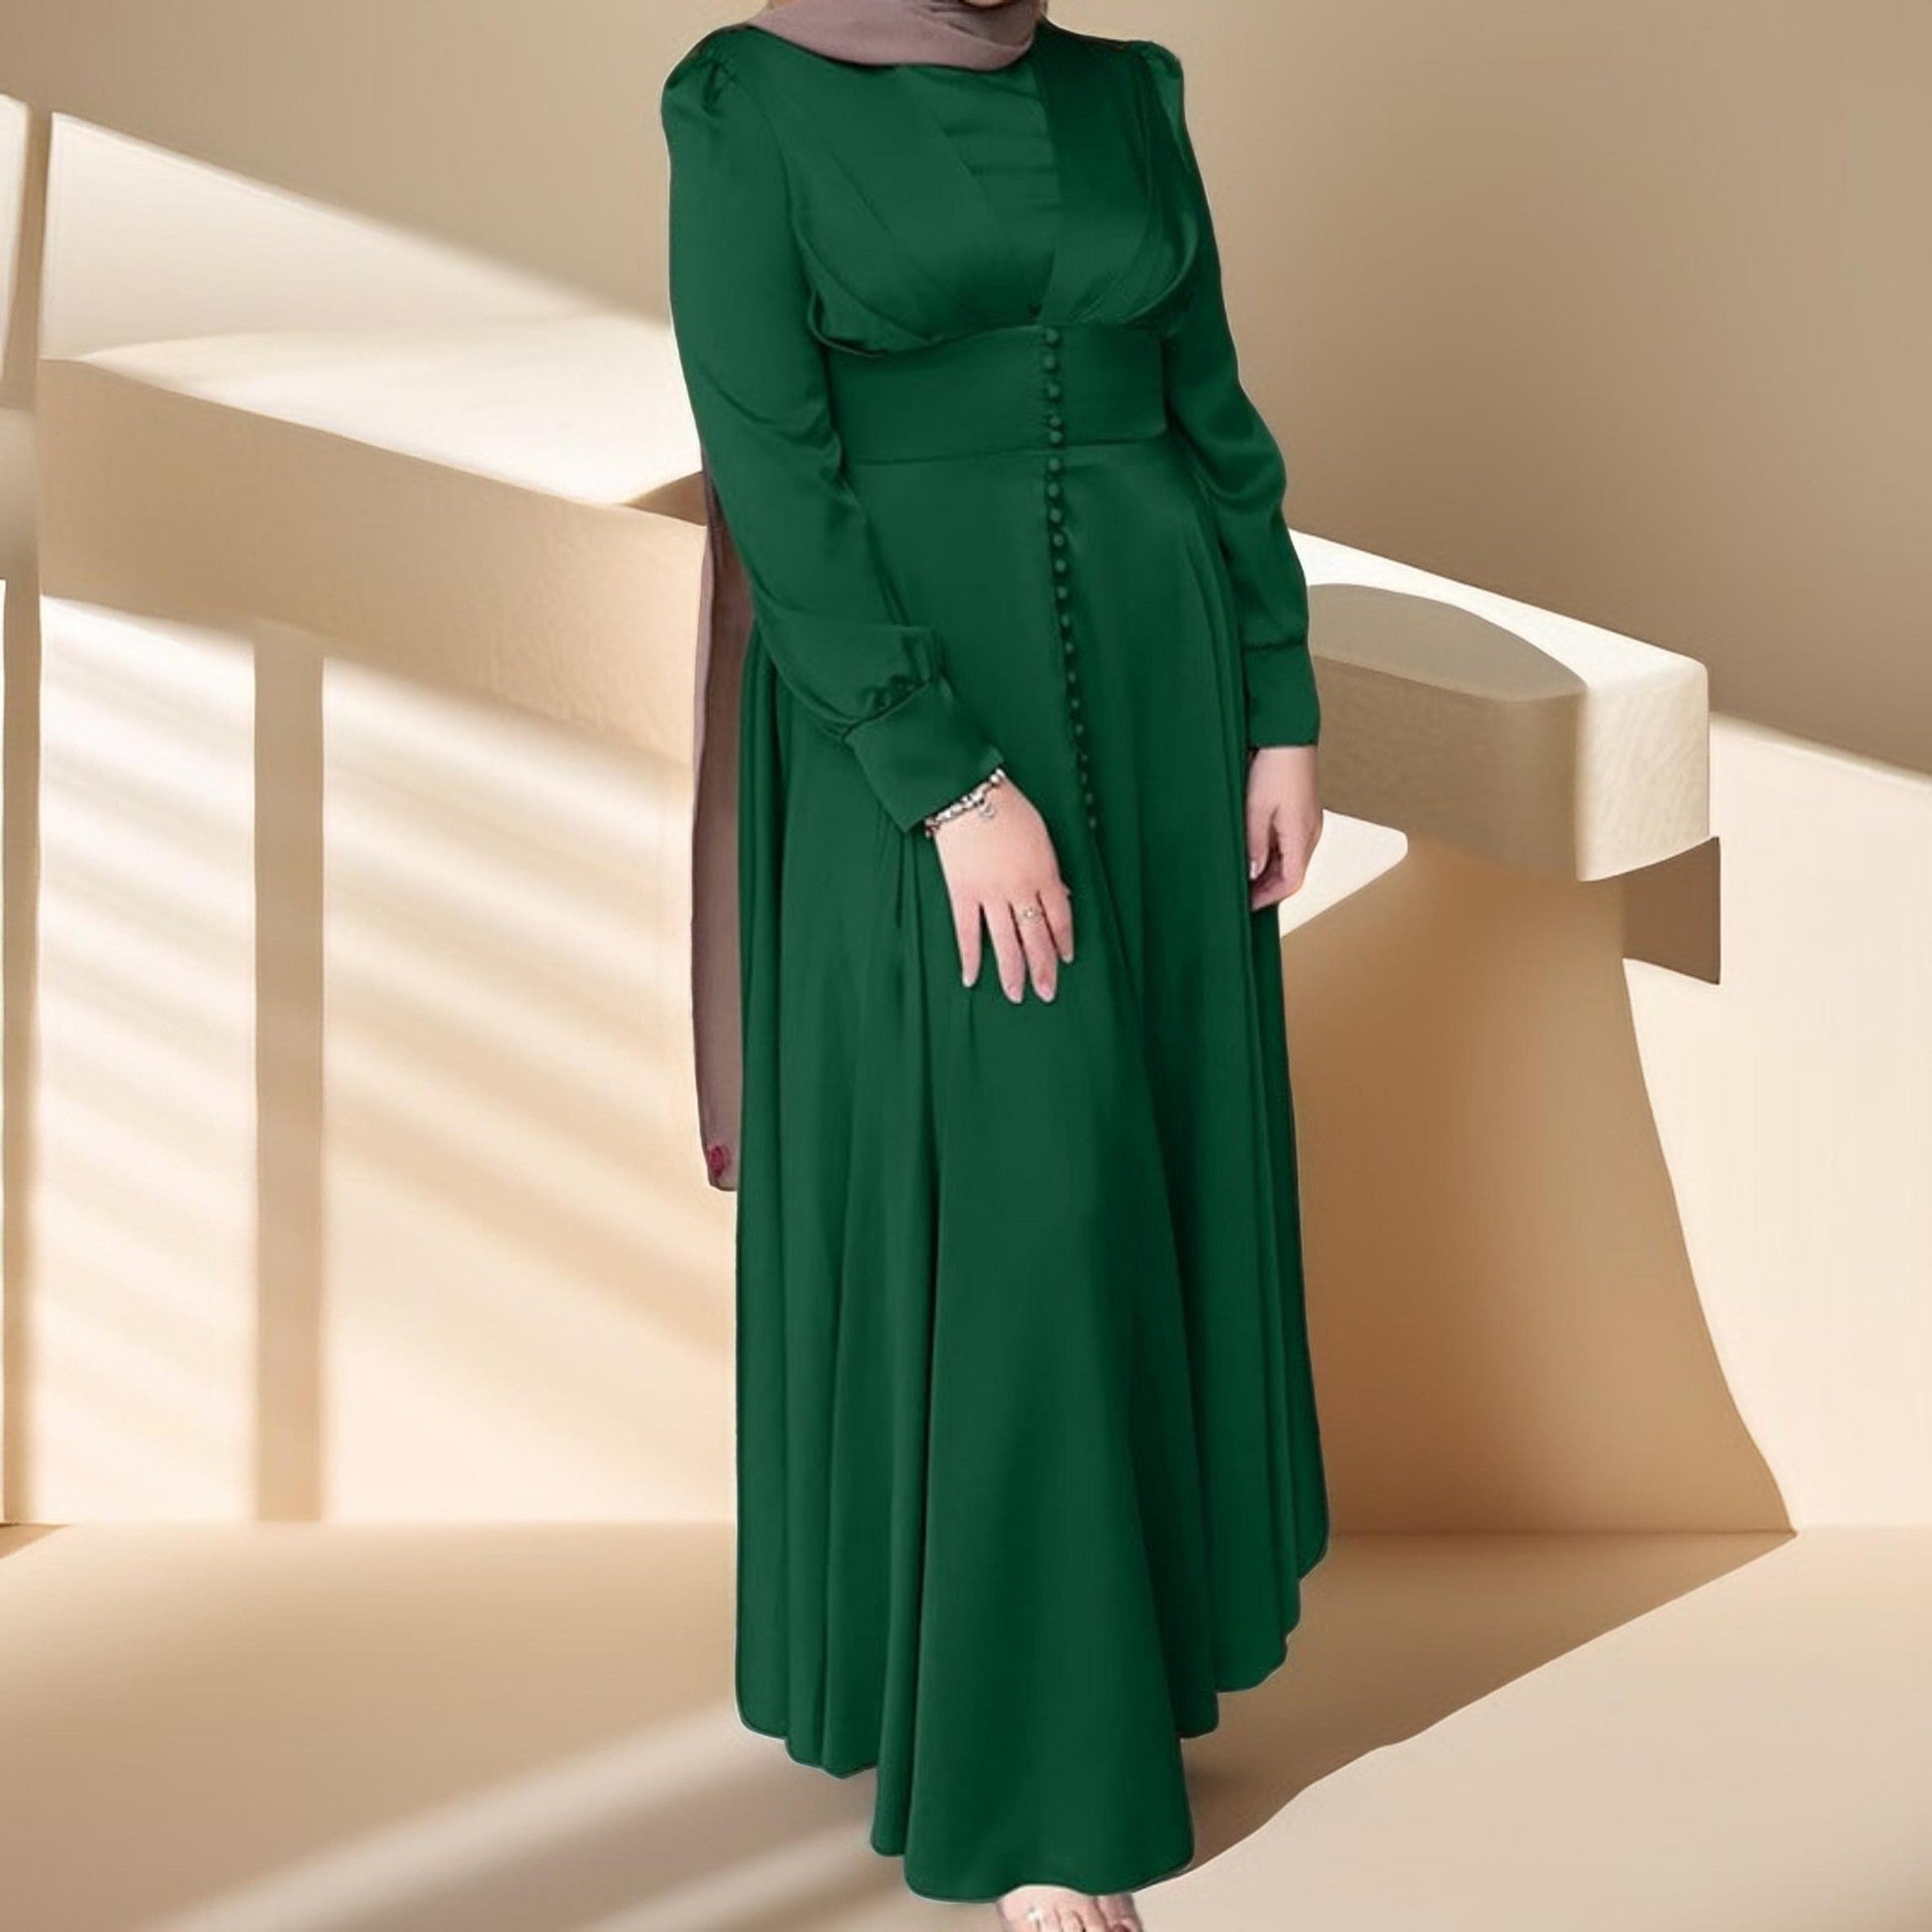 Festive dubai style-Evening dress - Try Modest Limited 